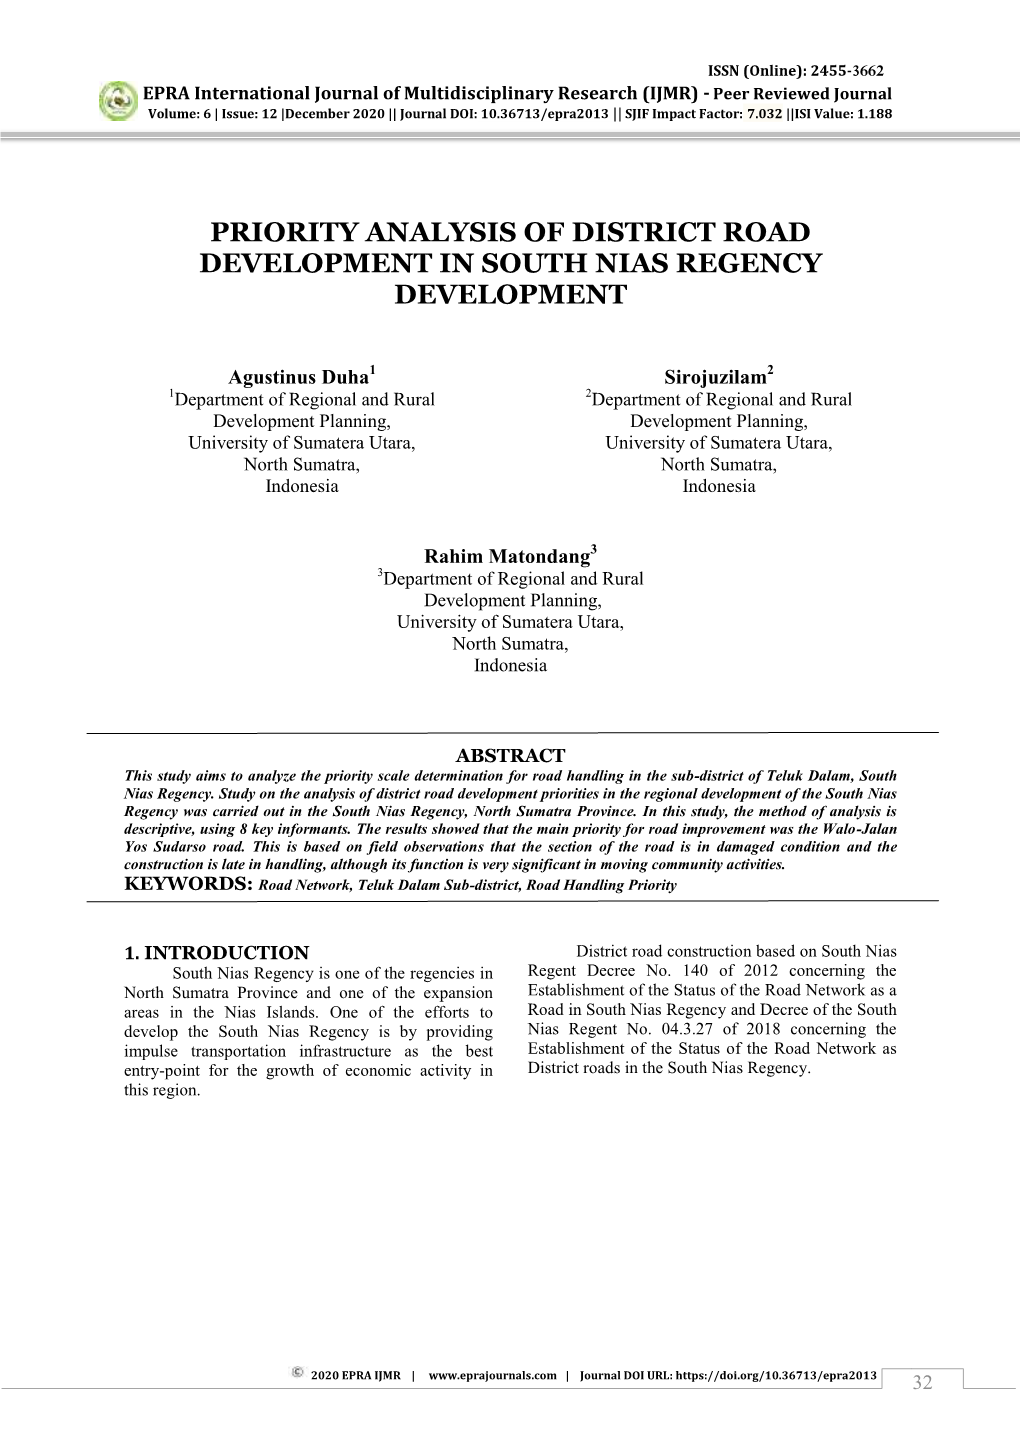 Priority Analysis of District Road Development in South Nias Regency Development